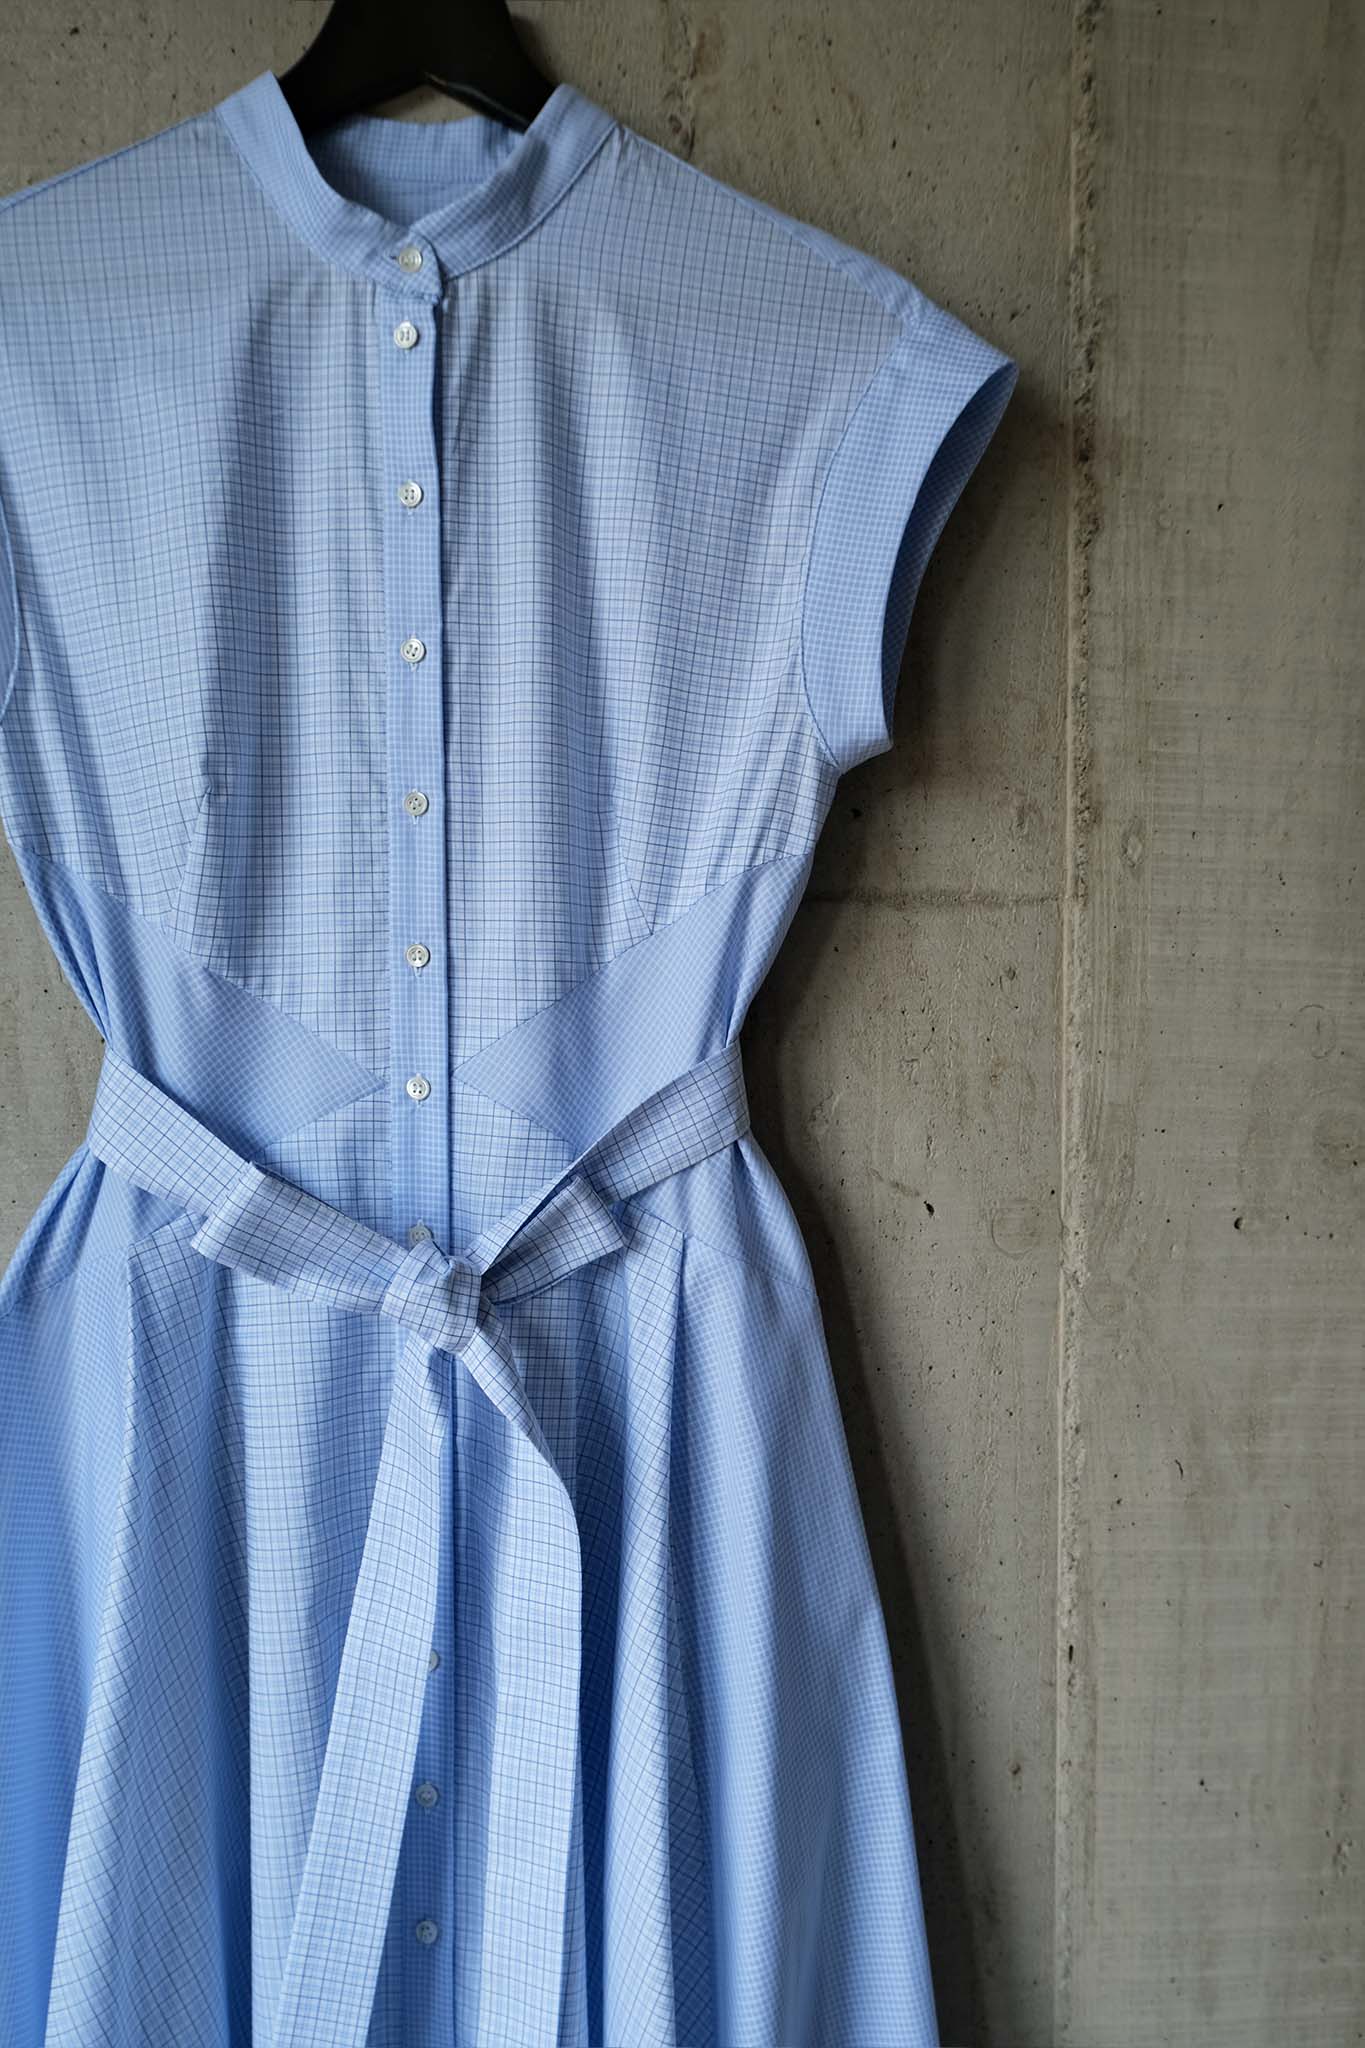 The Romanticist Cap Sleeve Shirt Dress in Light Blue Cotton Shirting